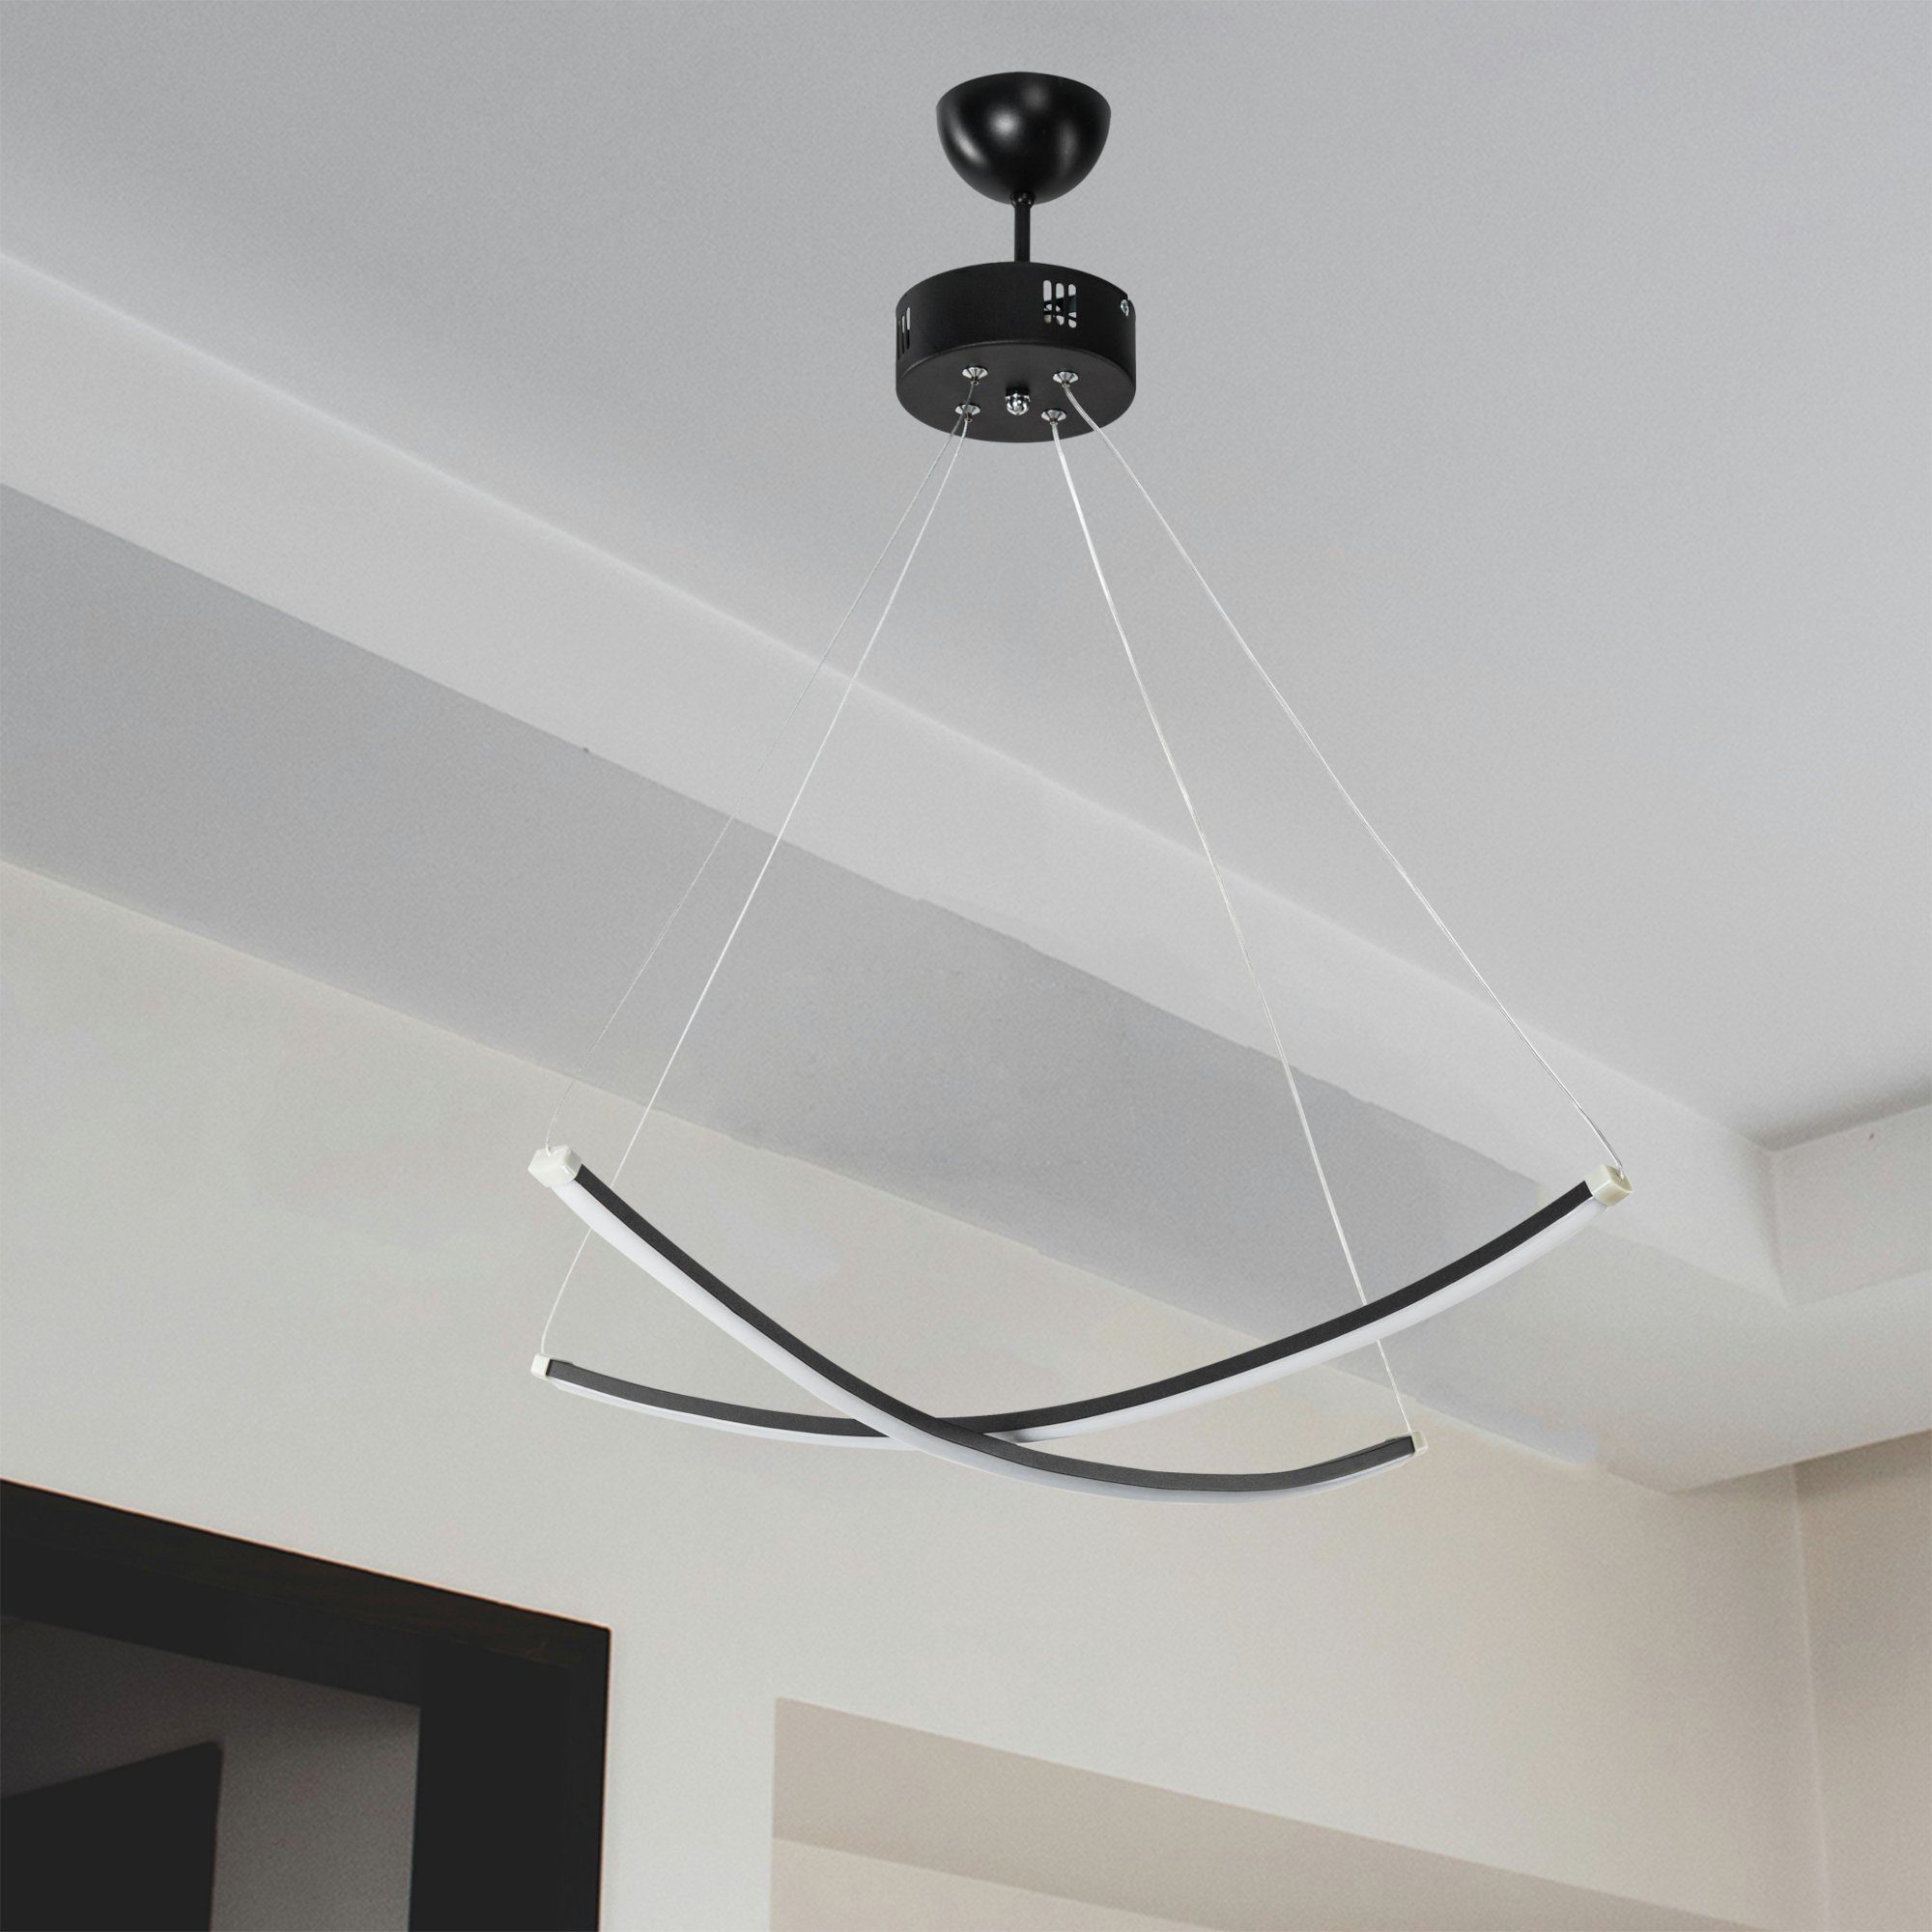 offiziell lux.pro Pendelleuchte, LED fest integriert, »Eastbourne« LED Hängelampe, 75x69cm, Schwarz/Weiß